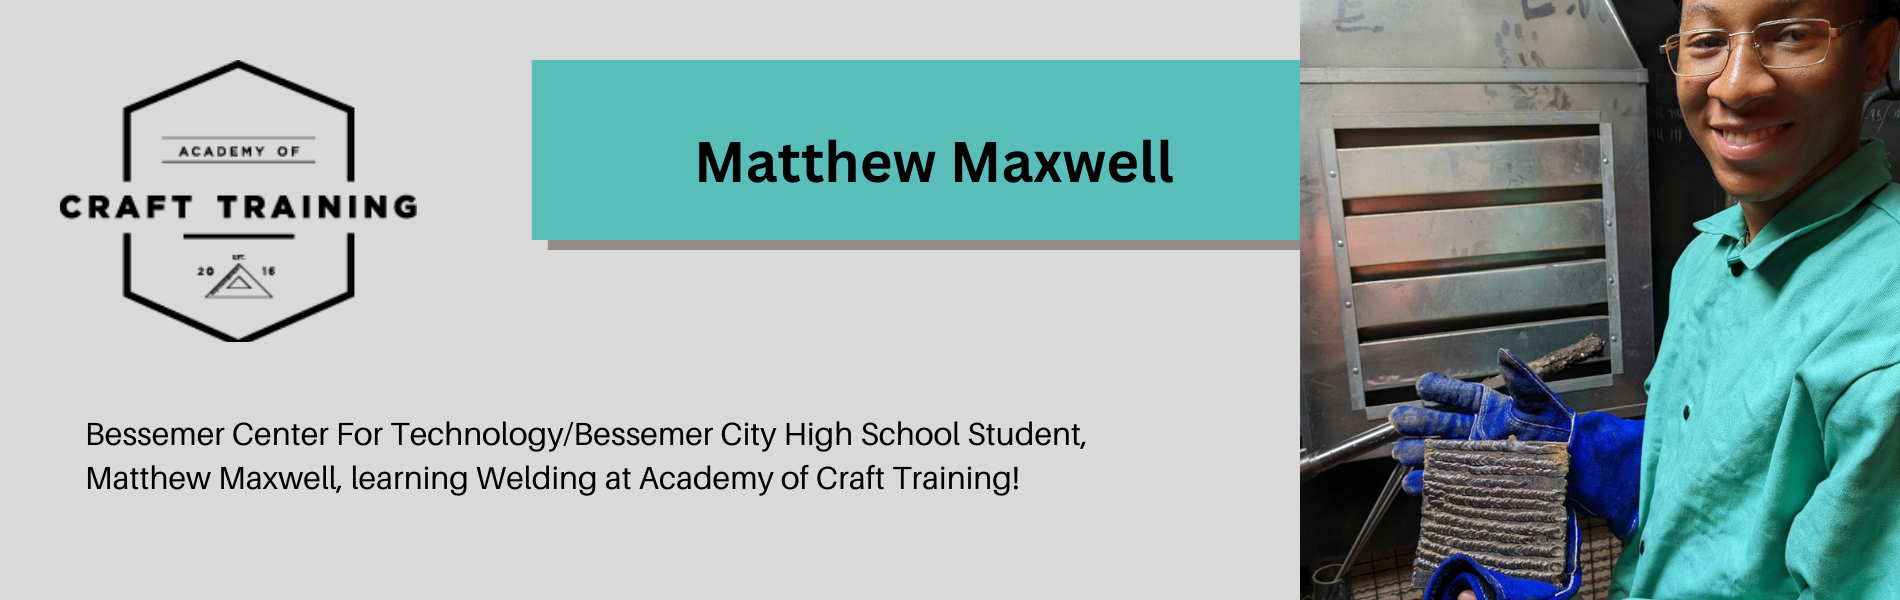 Academy of Craft Training - Matthew Maxwell